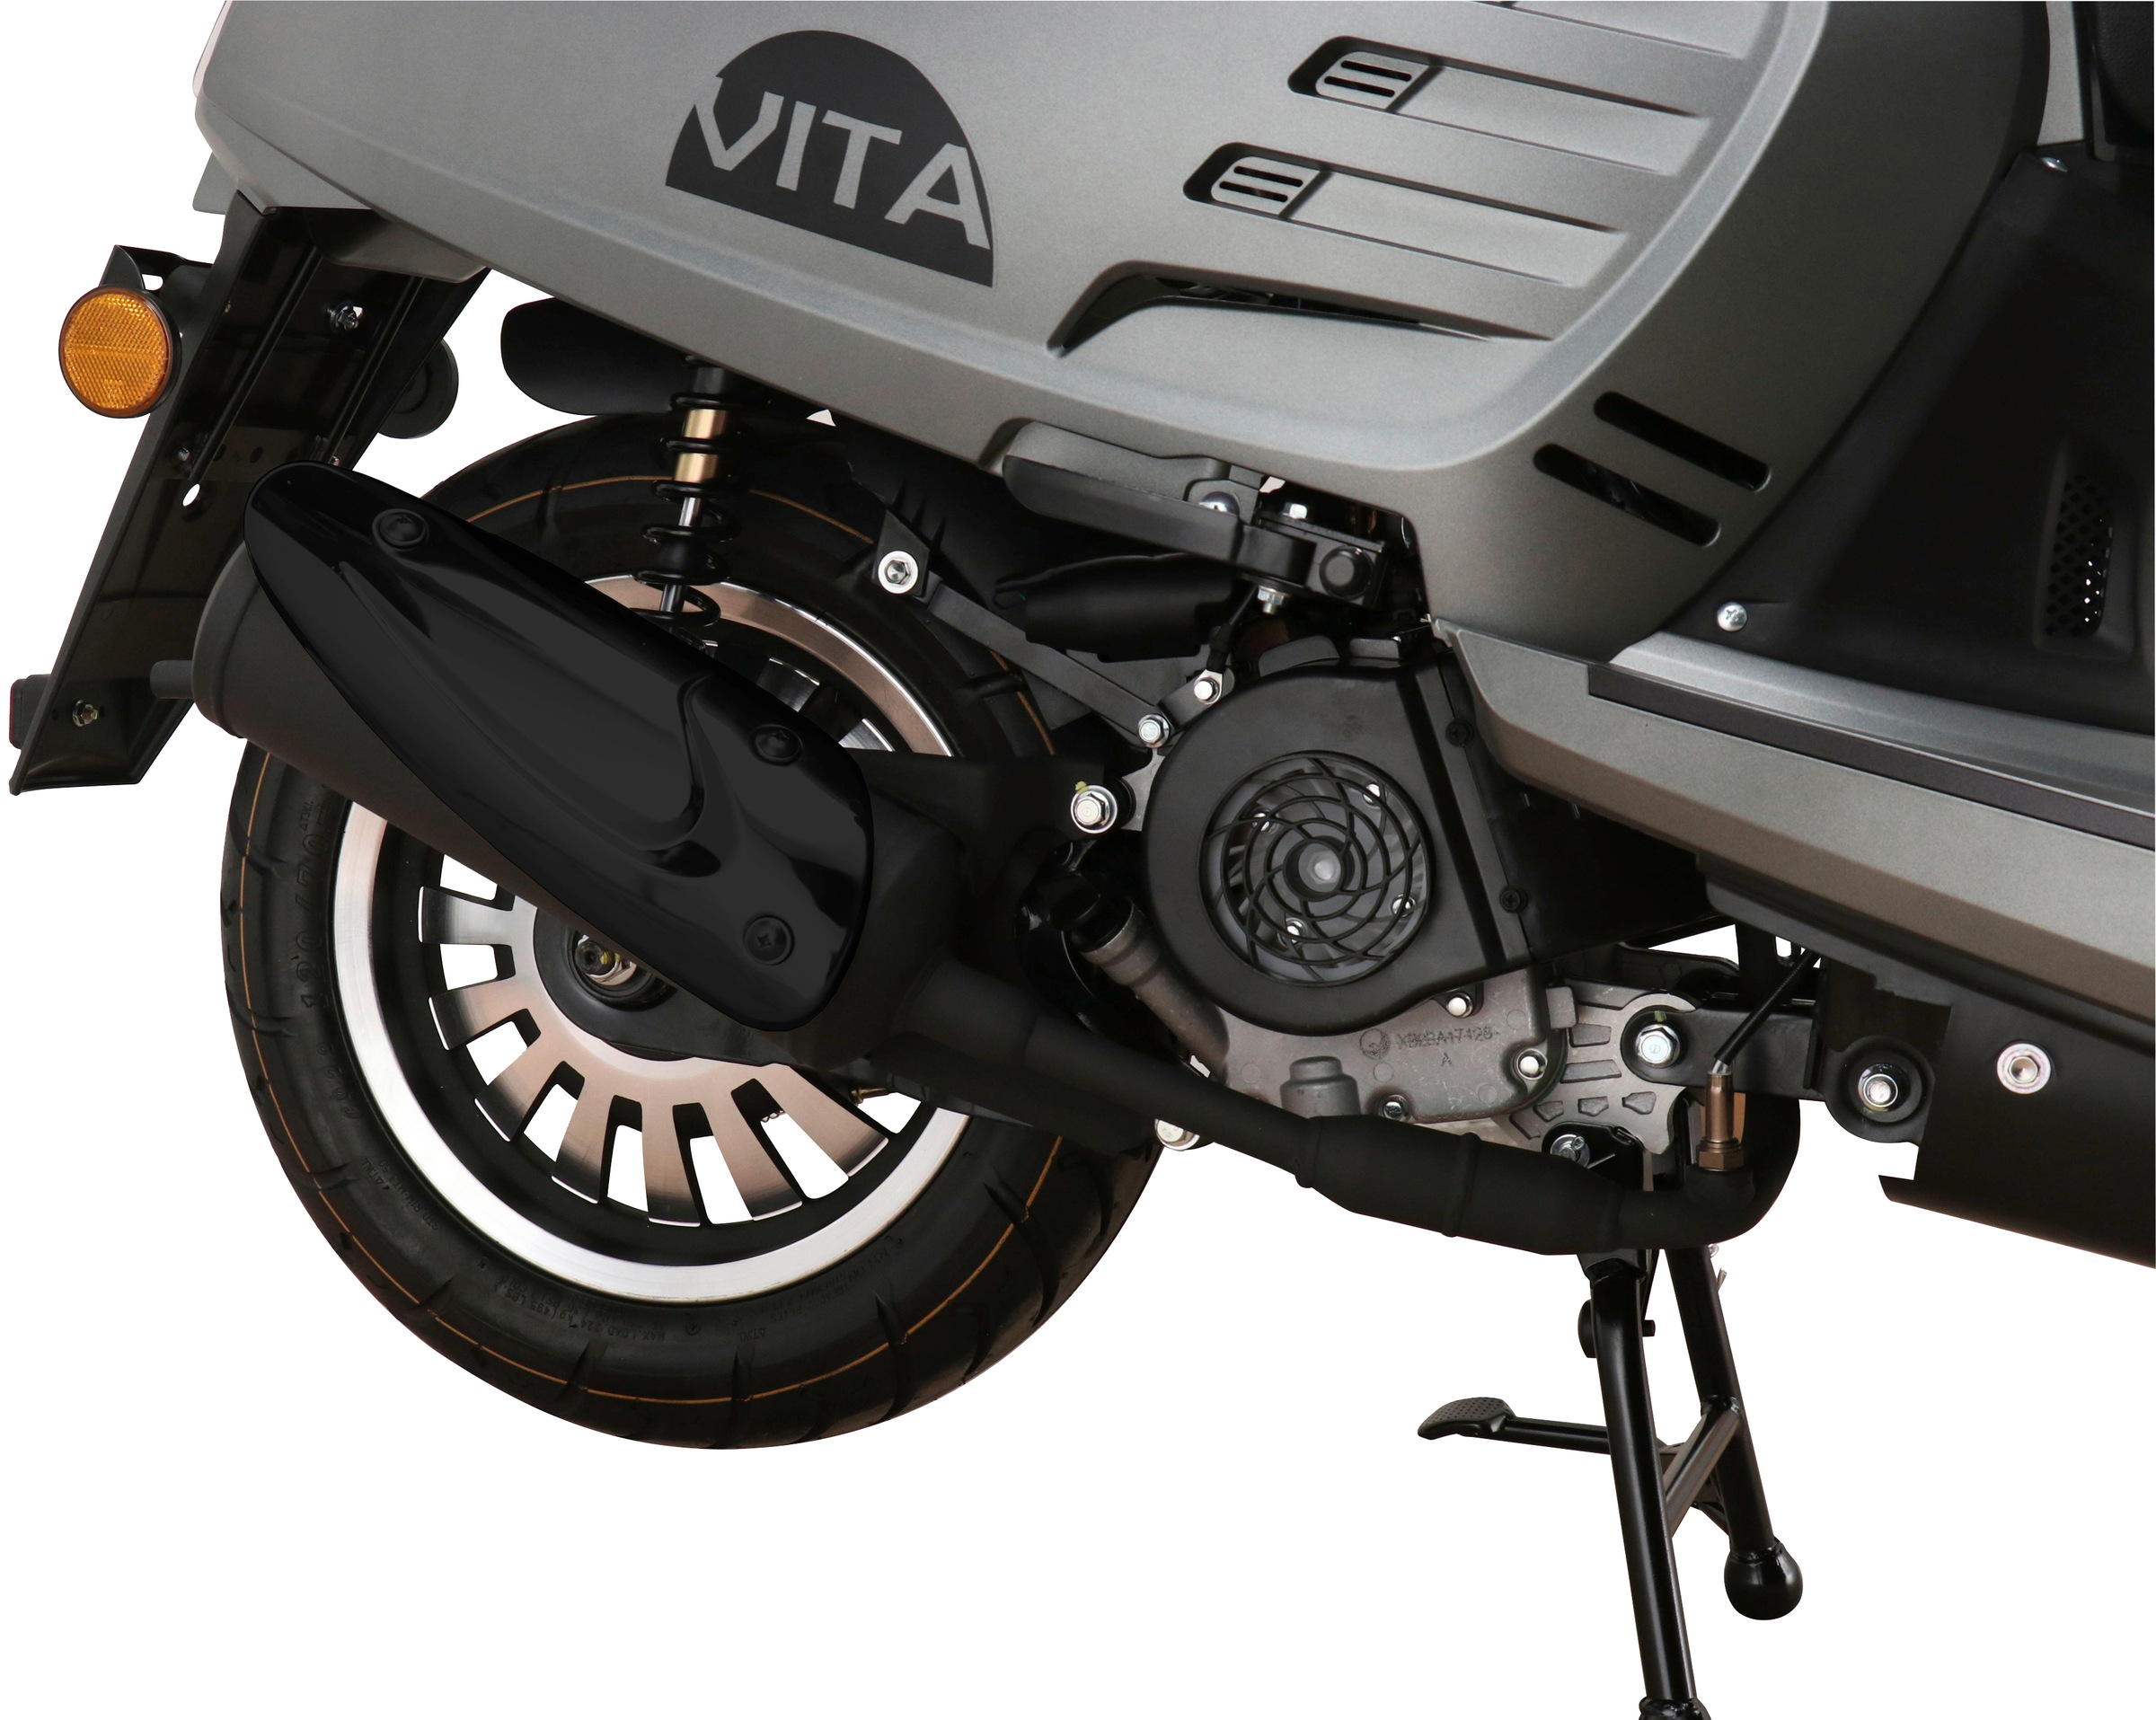 | Motorroller Motors PS Alpha 5, Euro km/h, BAUR 8,56 85 auf »Vita«, Raten 125 cm³,